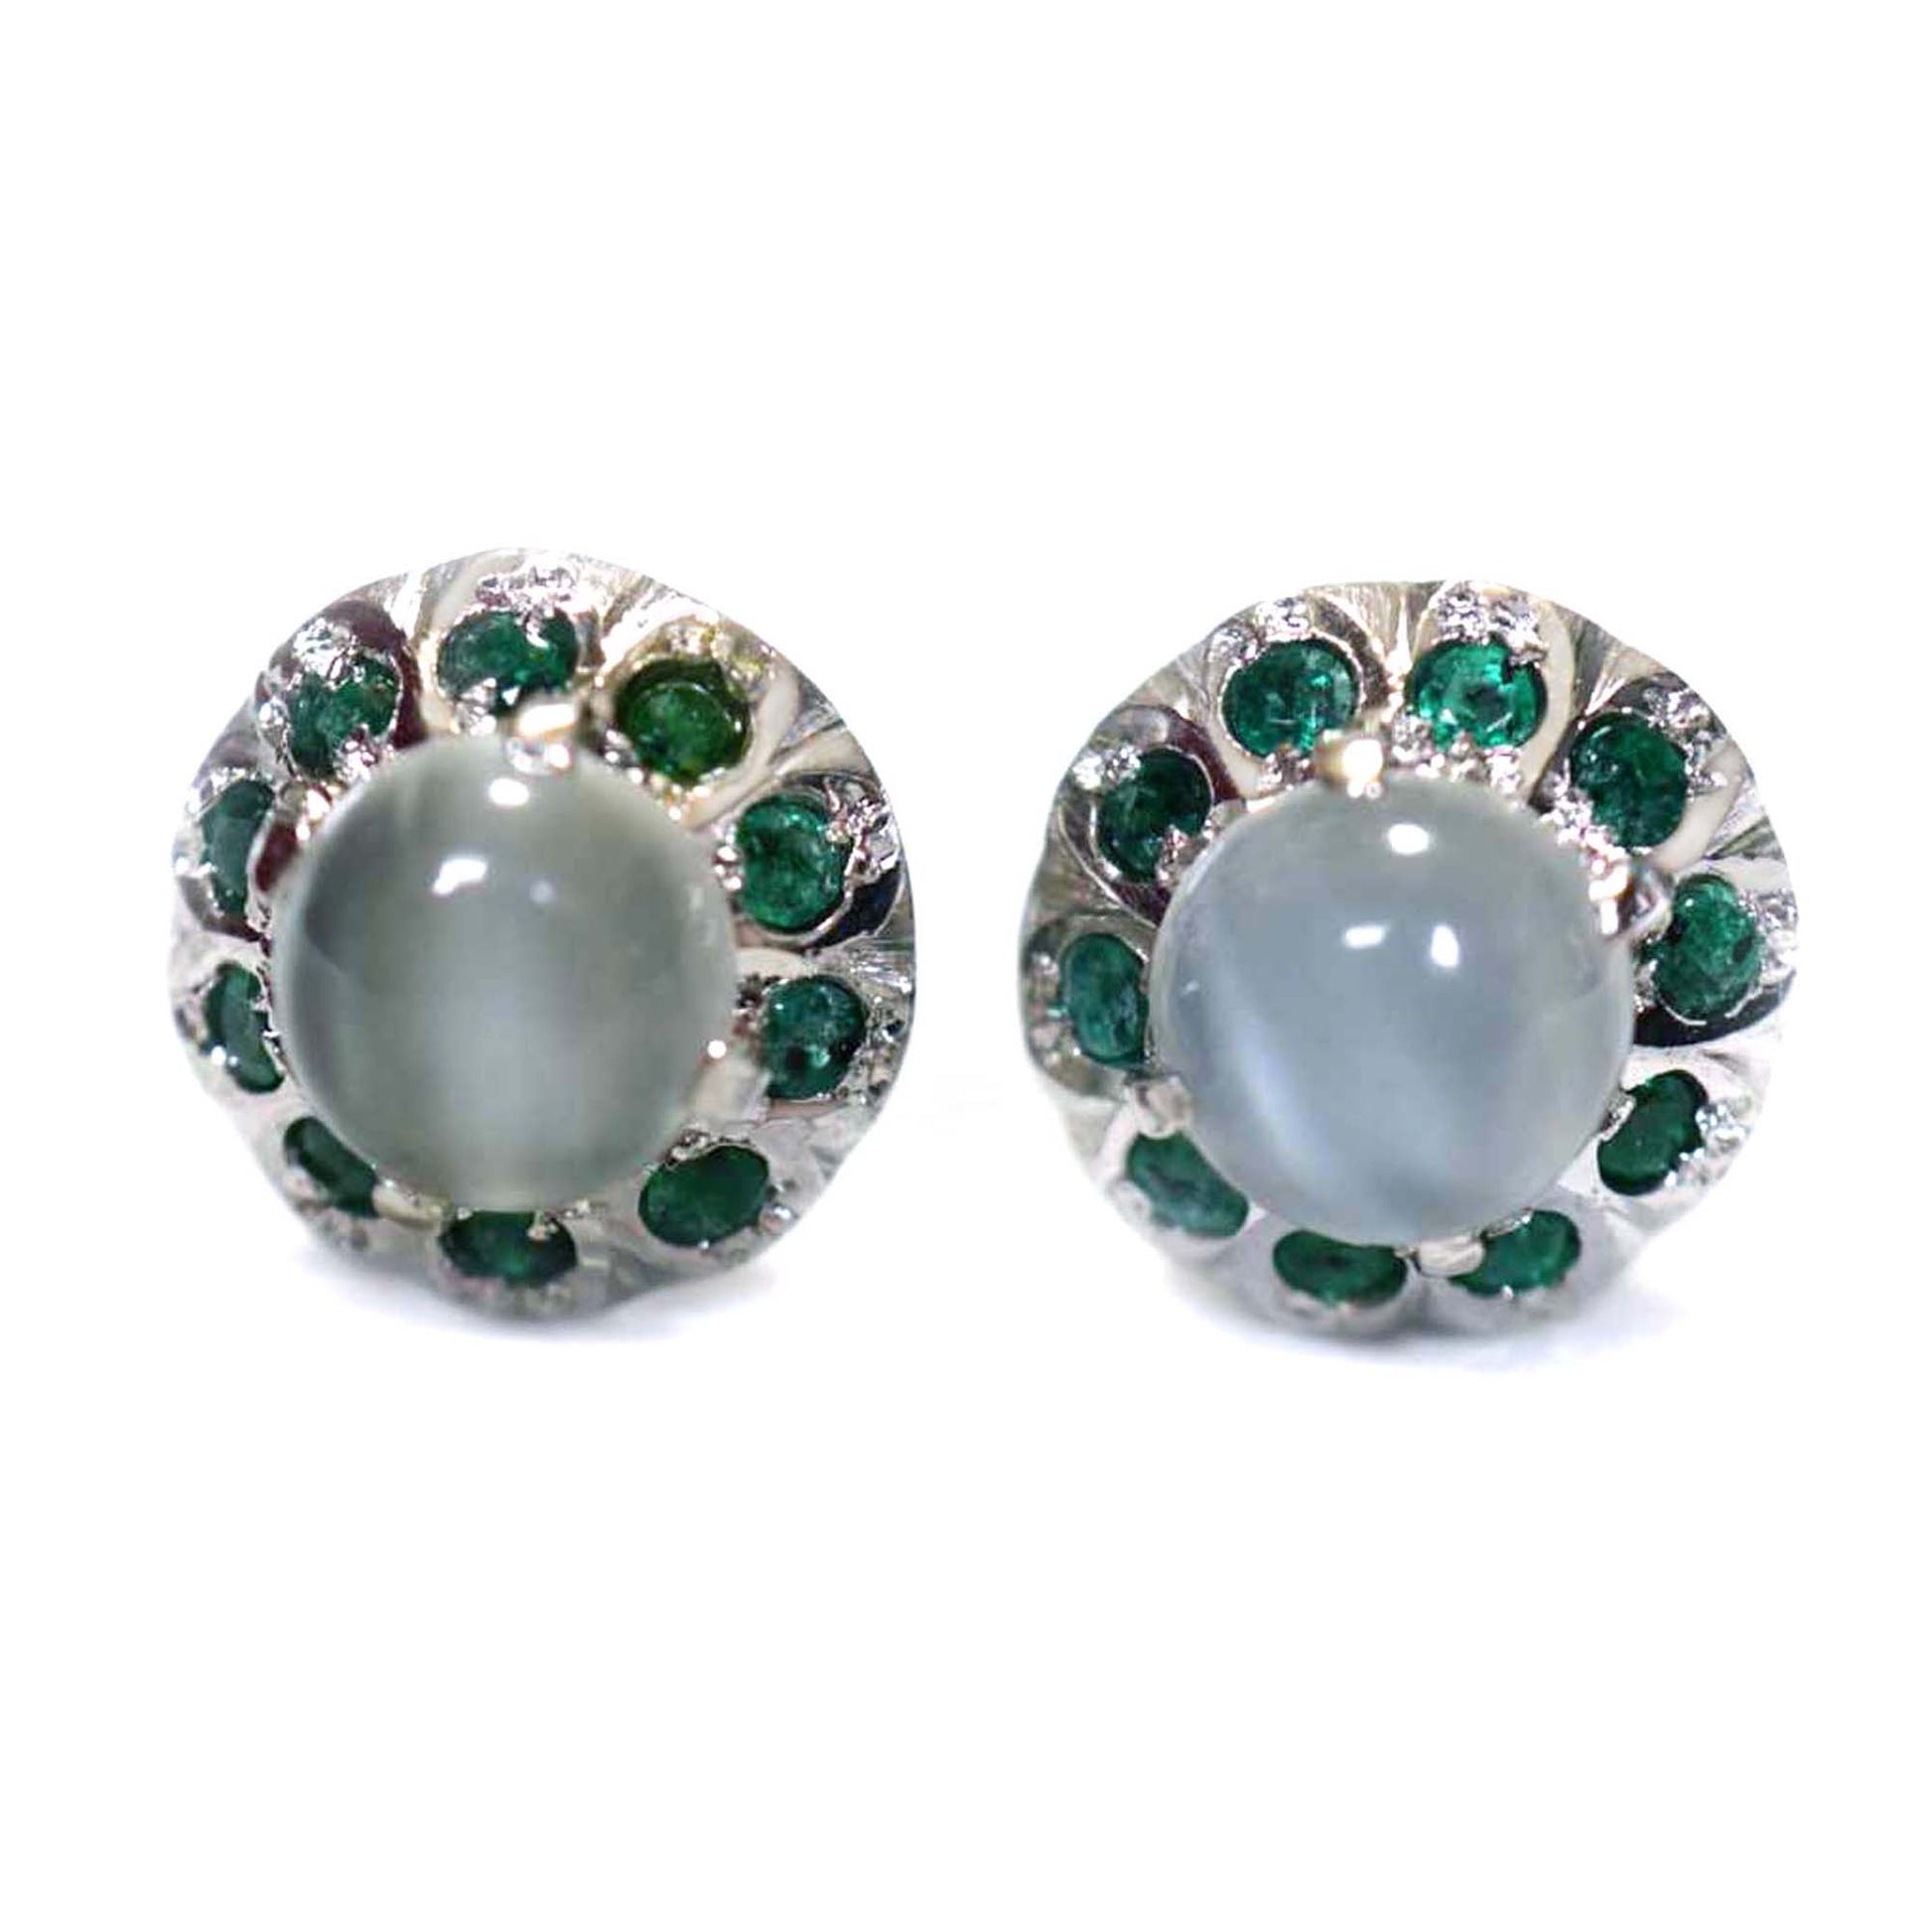 Moonstone and Green Garnet Stud Earrings in Sterling Silver 